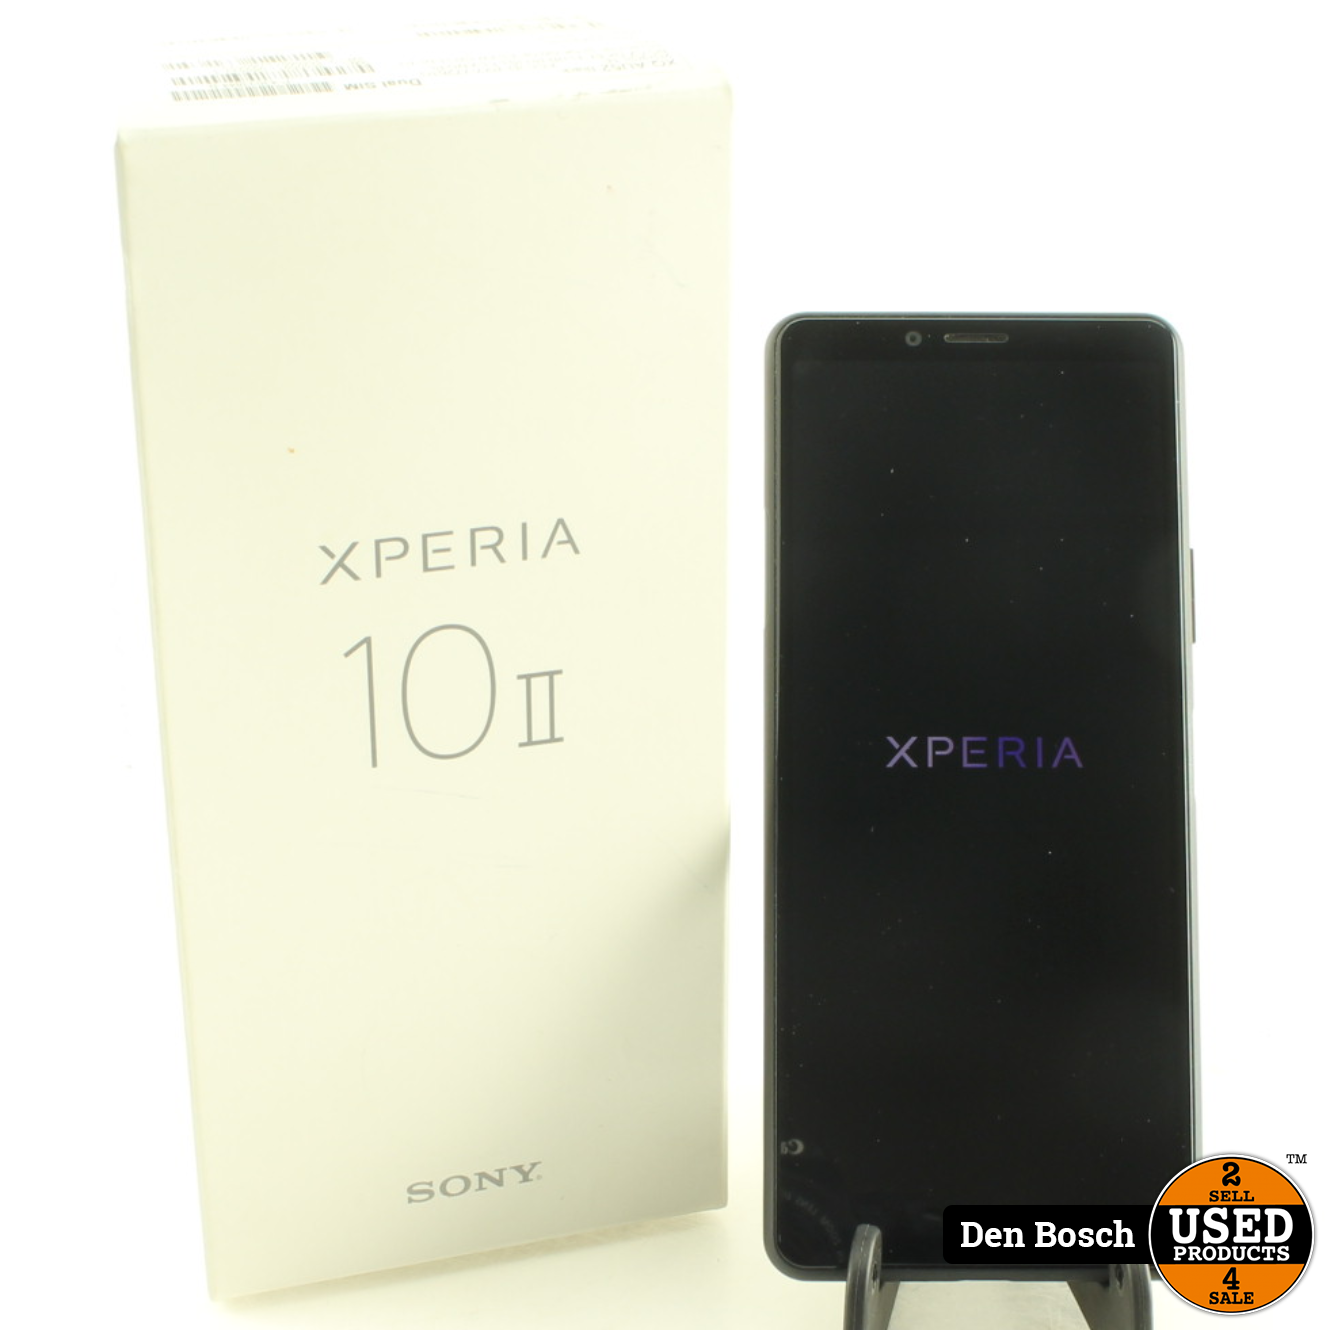 regisseur lila chirurg Sony Xperia 10 II met Doos - Used Products Den Bosch